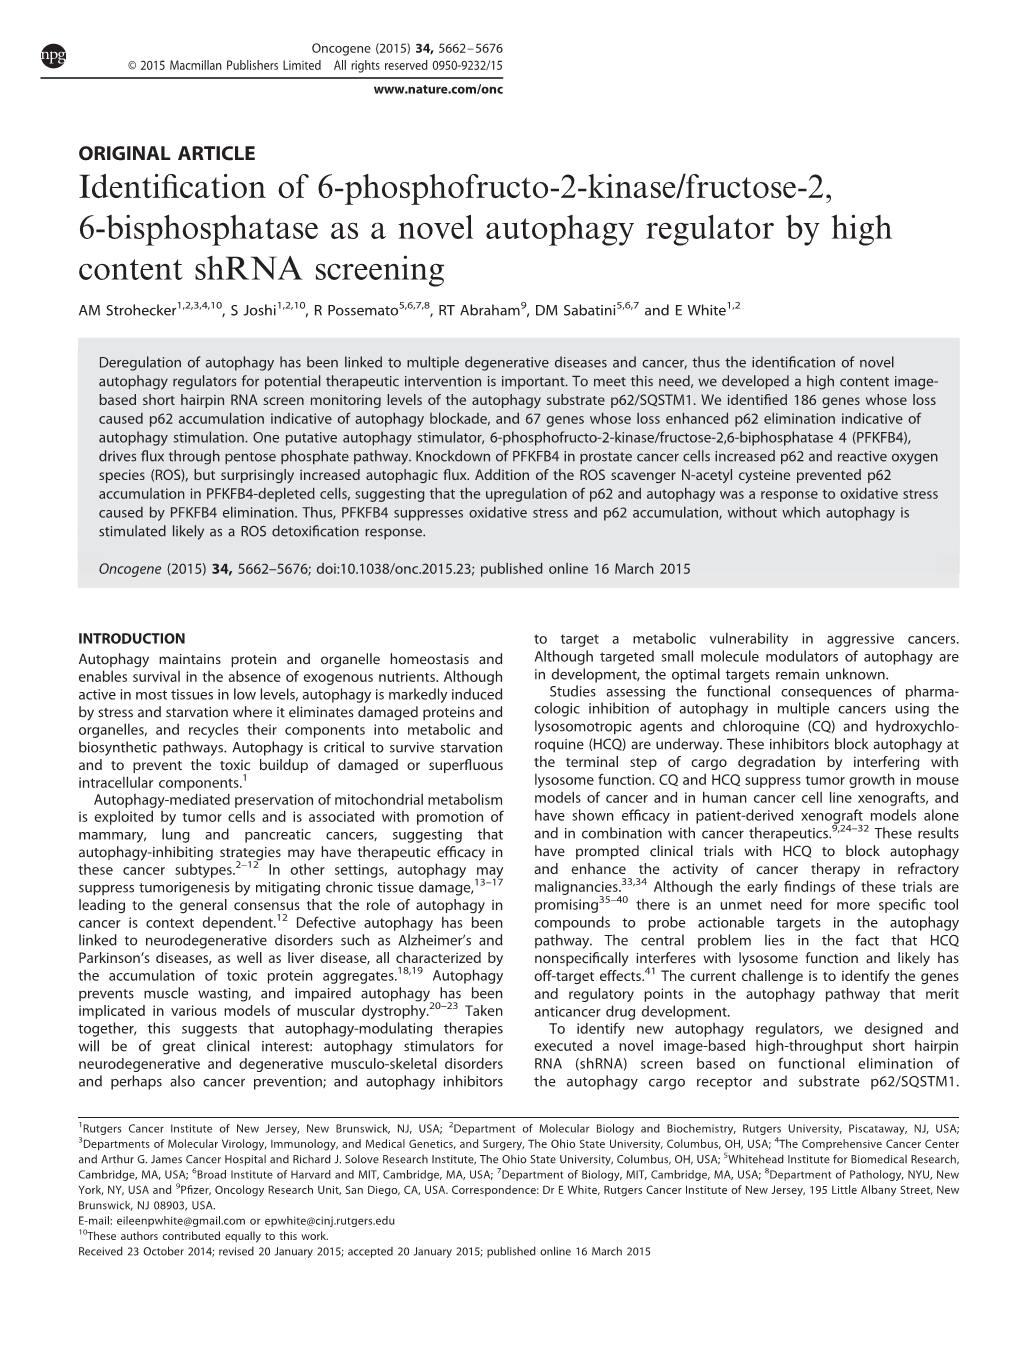 Identification of 6-Phosphofructo-2-Kinase/Fructose-2, 6-Bisphosphatase As a Novel Autophagy Regulator by High Content Shrna Screening